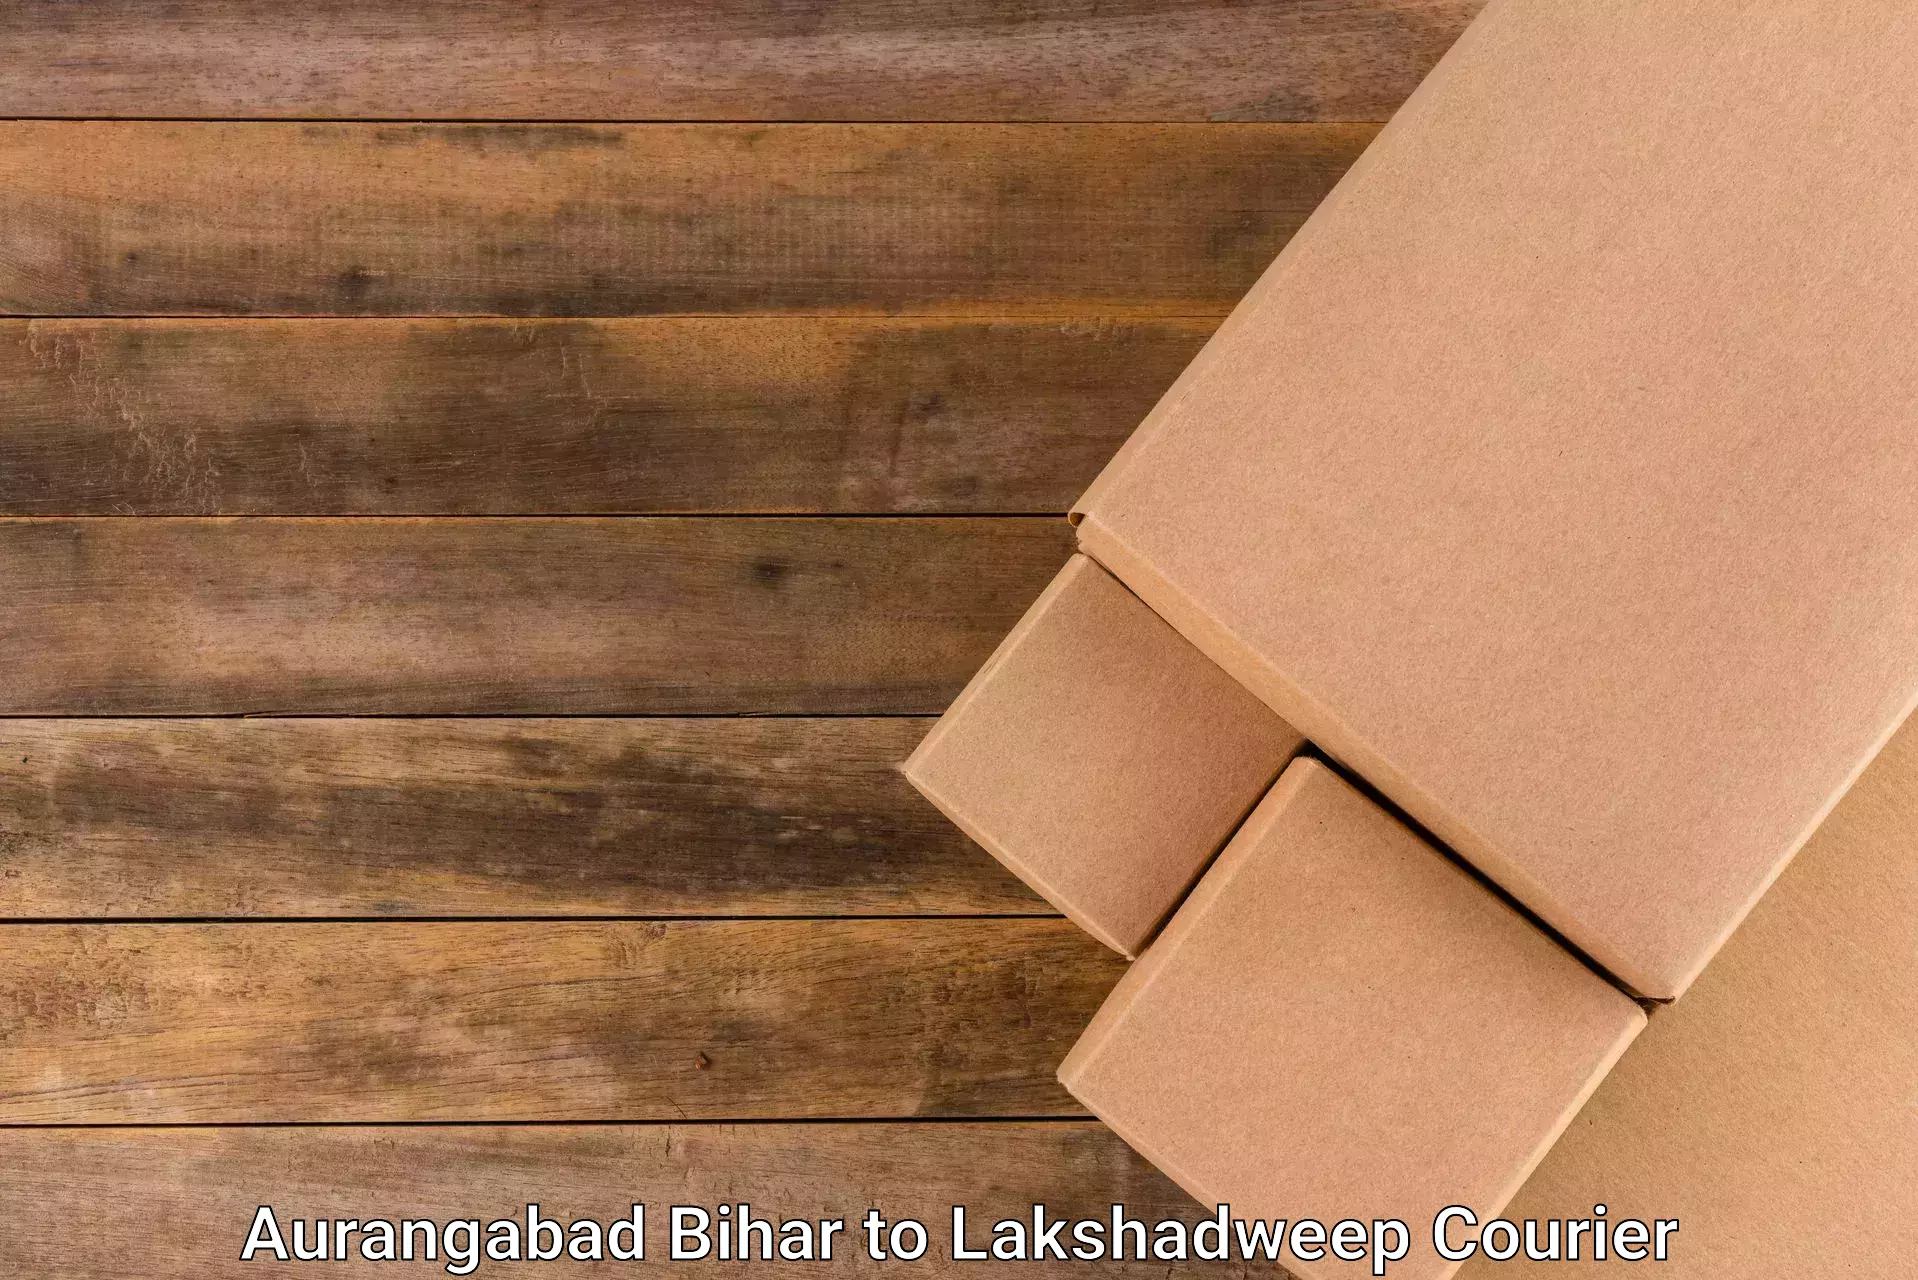 Large package courier Aurangabad Bihar to Lakshadweep